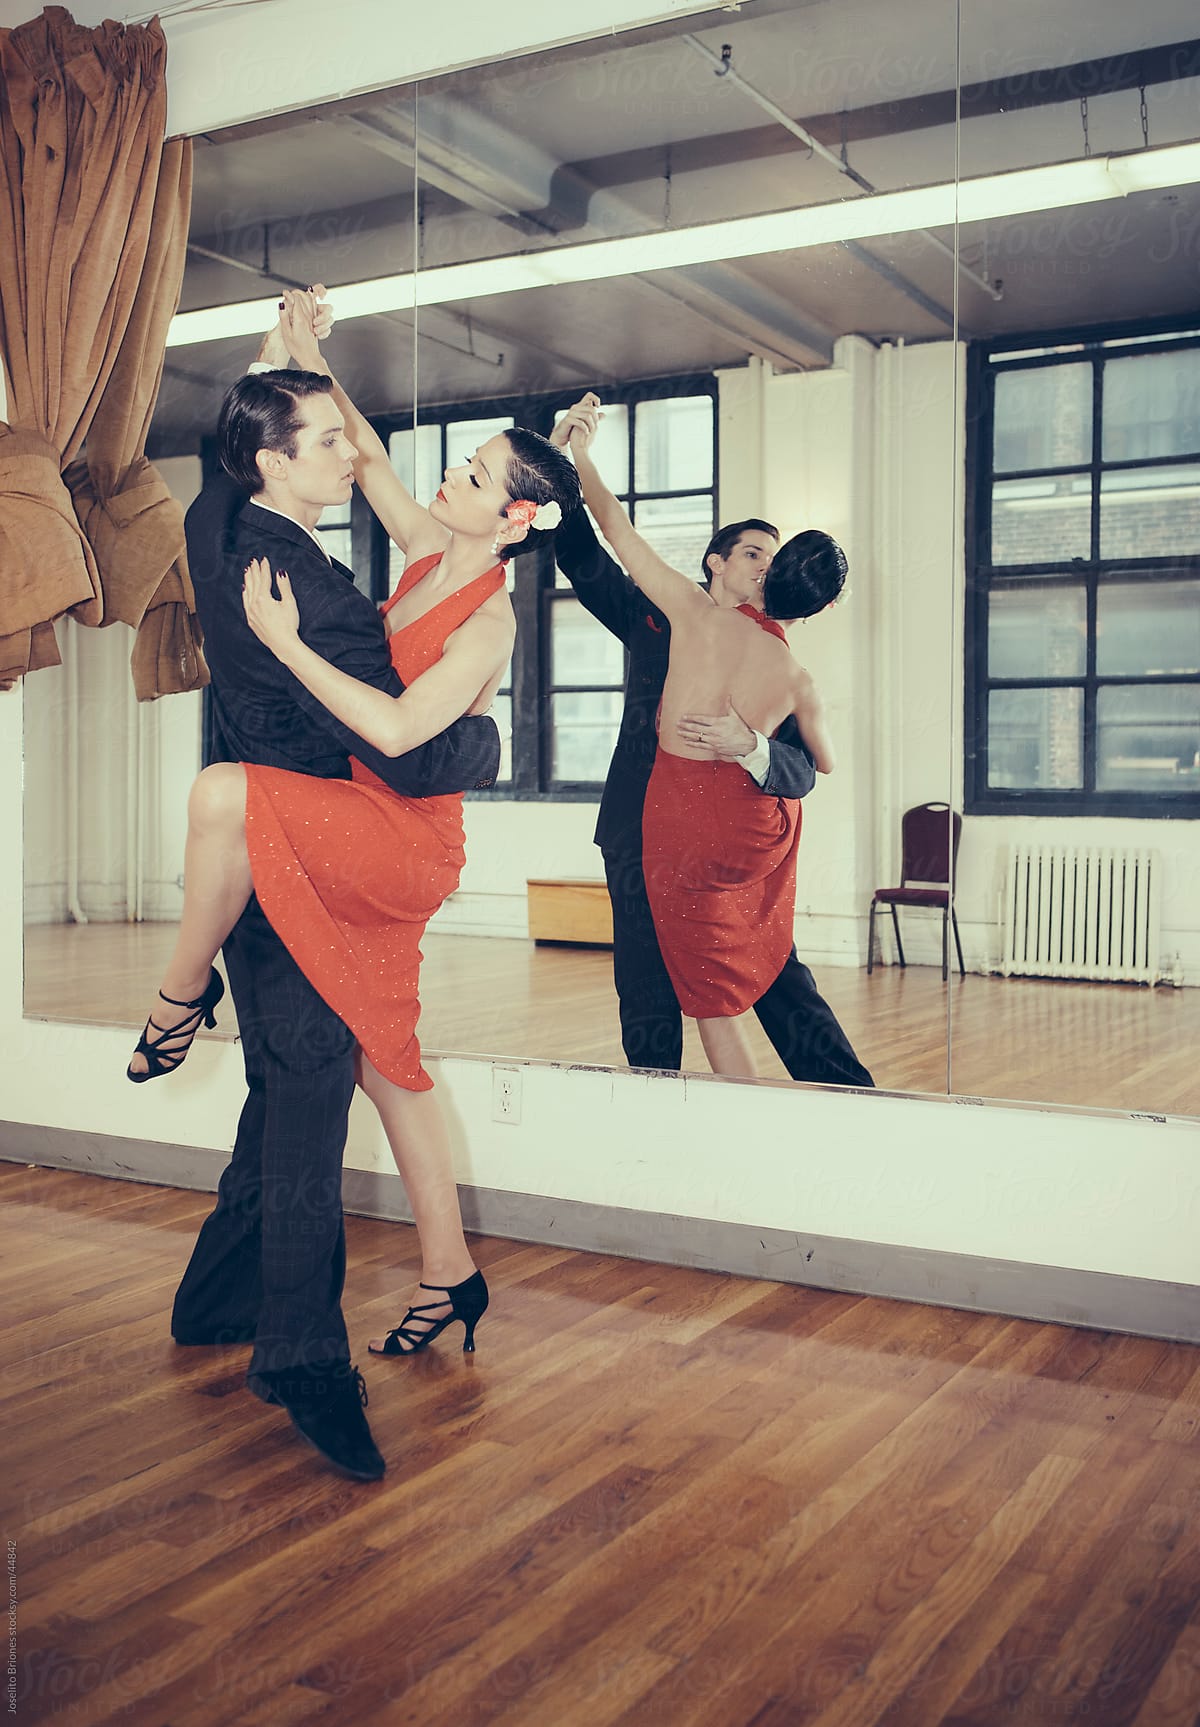 Ballroom Dancing - Couple in Argentinian Tango